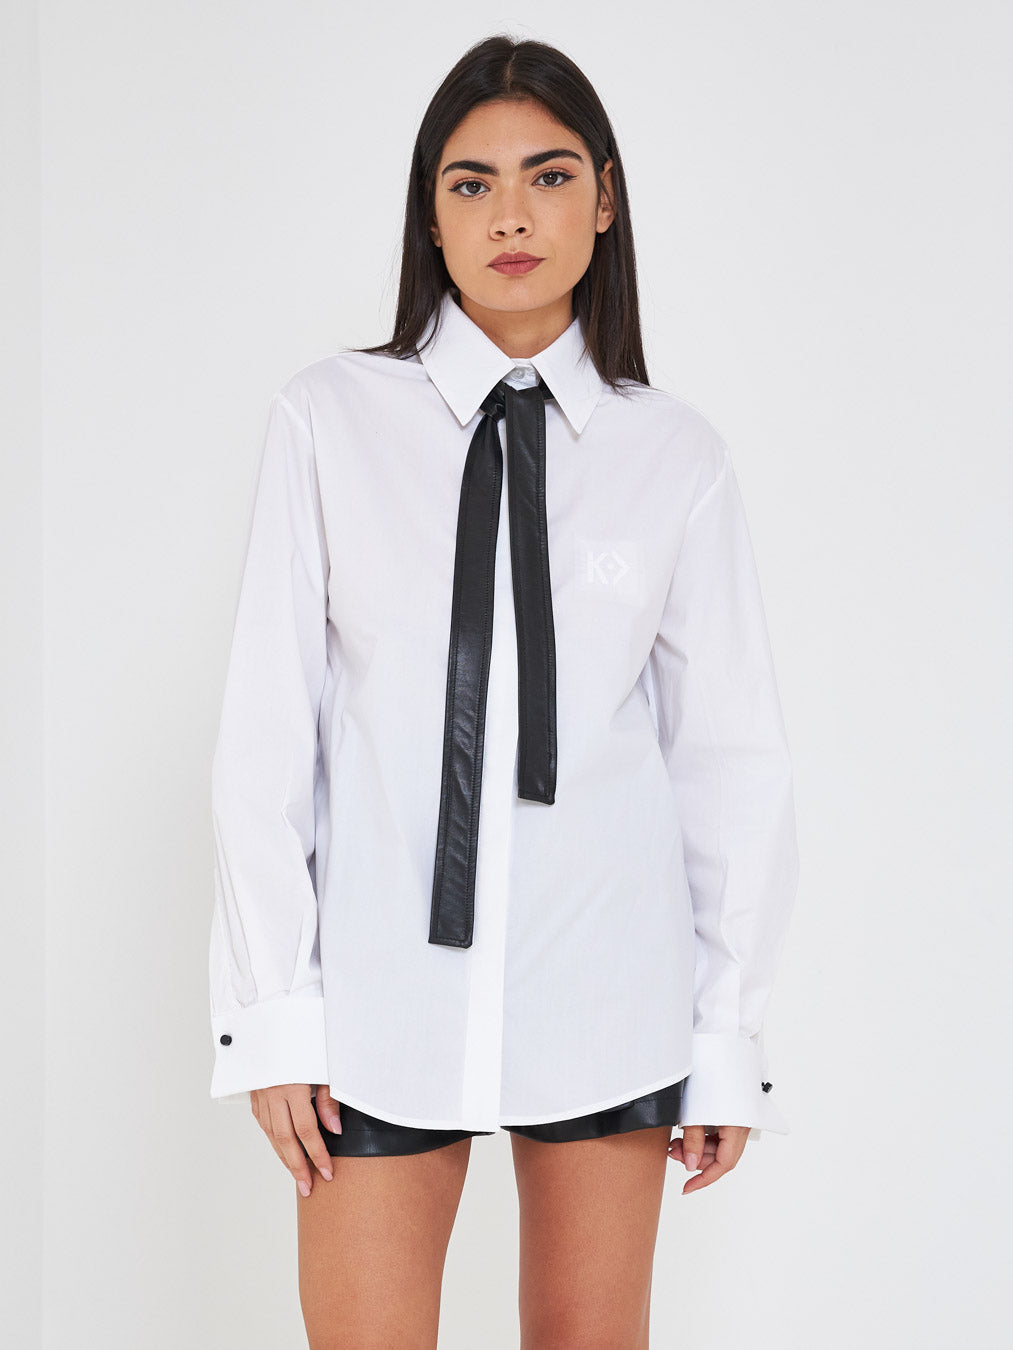 Kostumn white shirt with leather tie